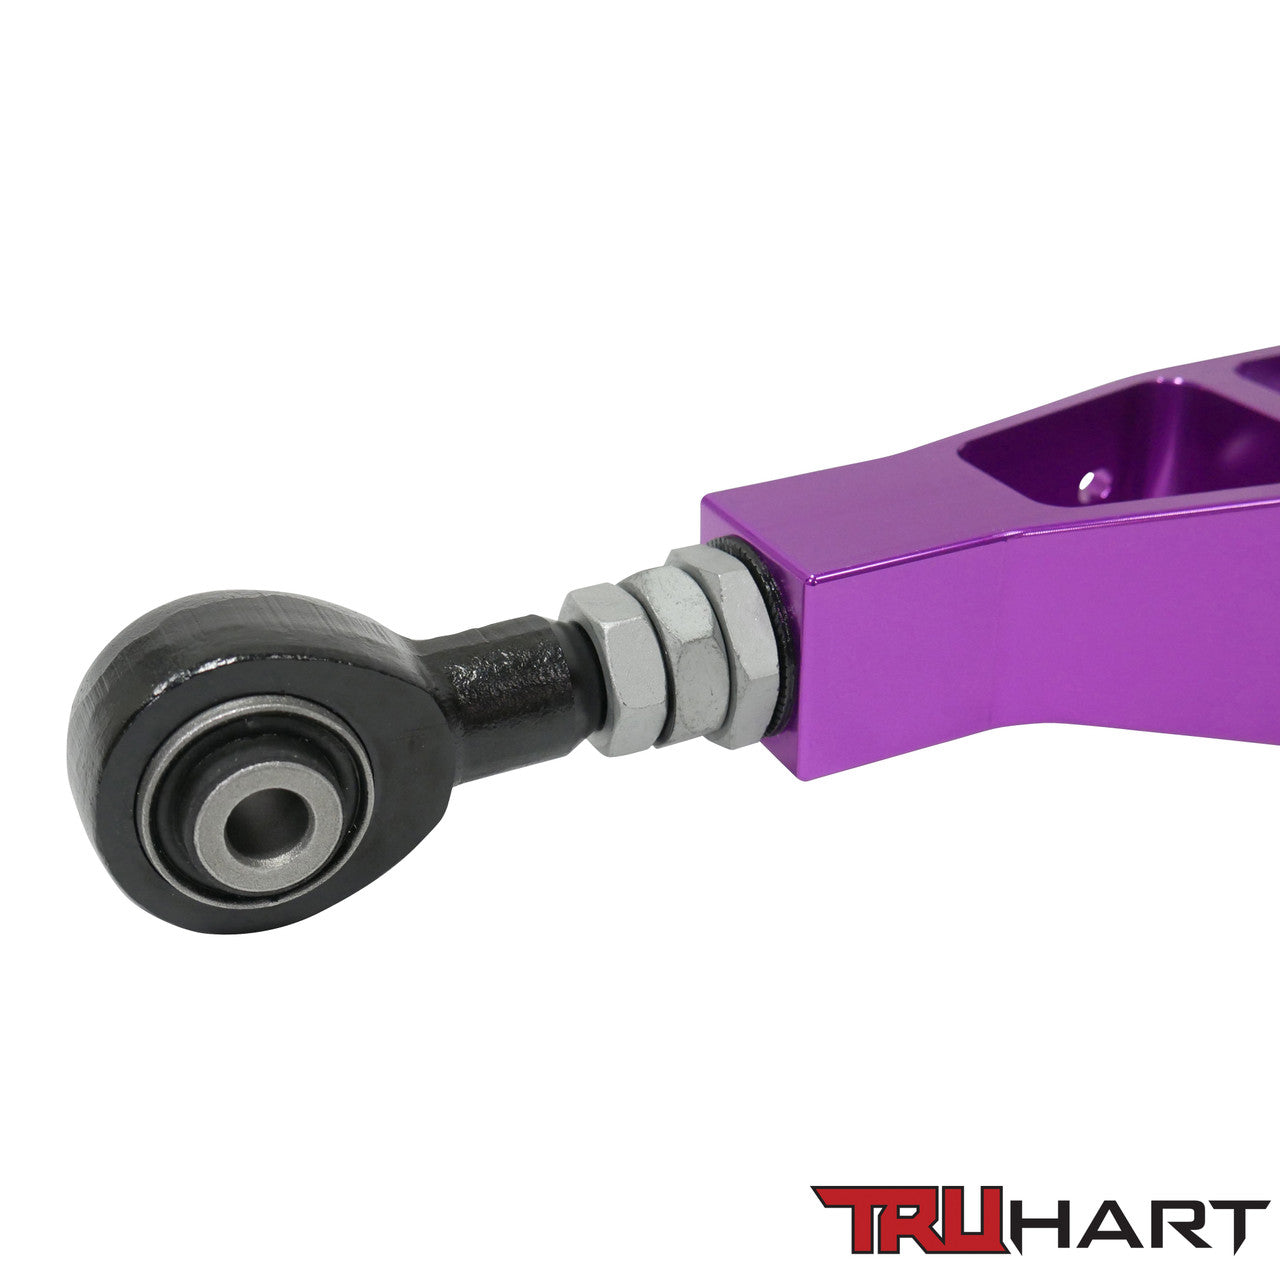 TruHart Adjustable Rear Lower Control Arms Kit For Subaru Impreza WRX STI 2008 - 2016 (Purple)